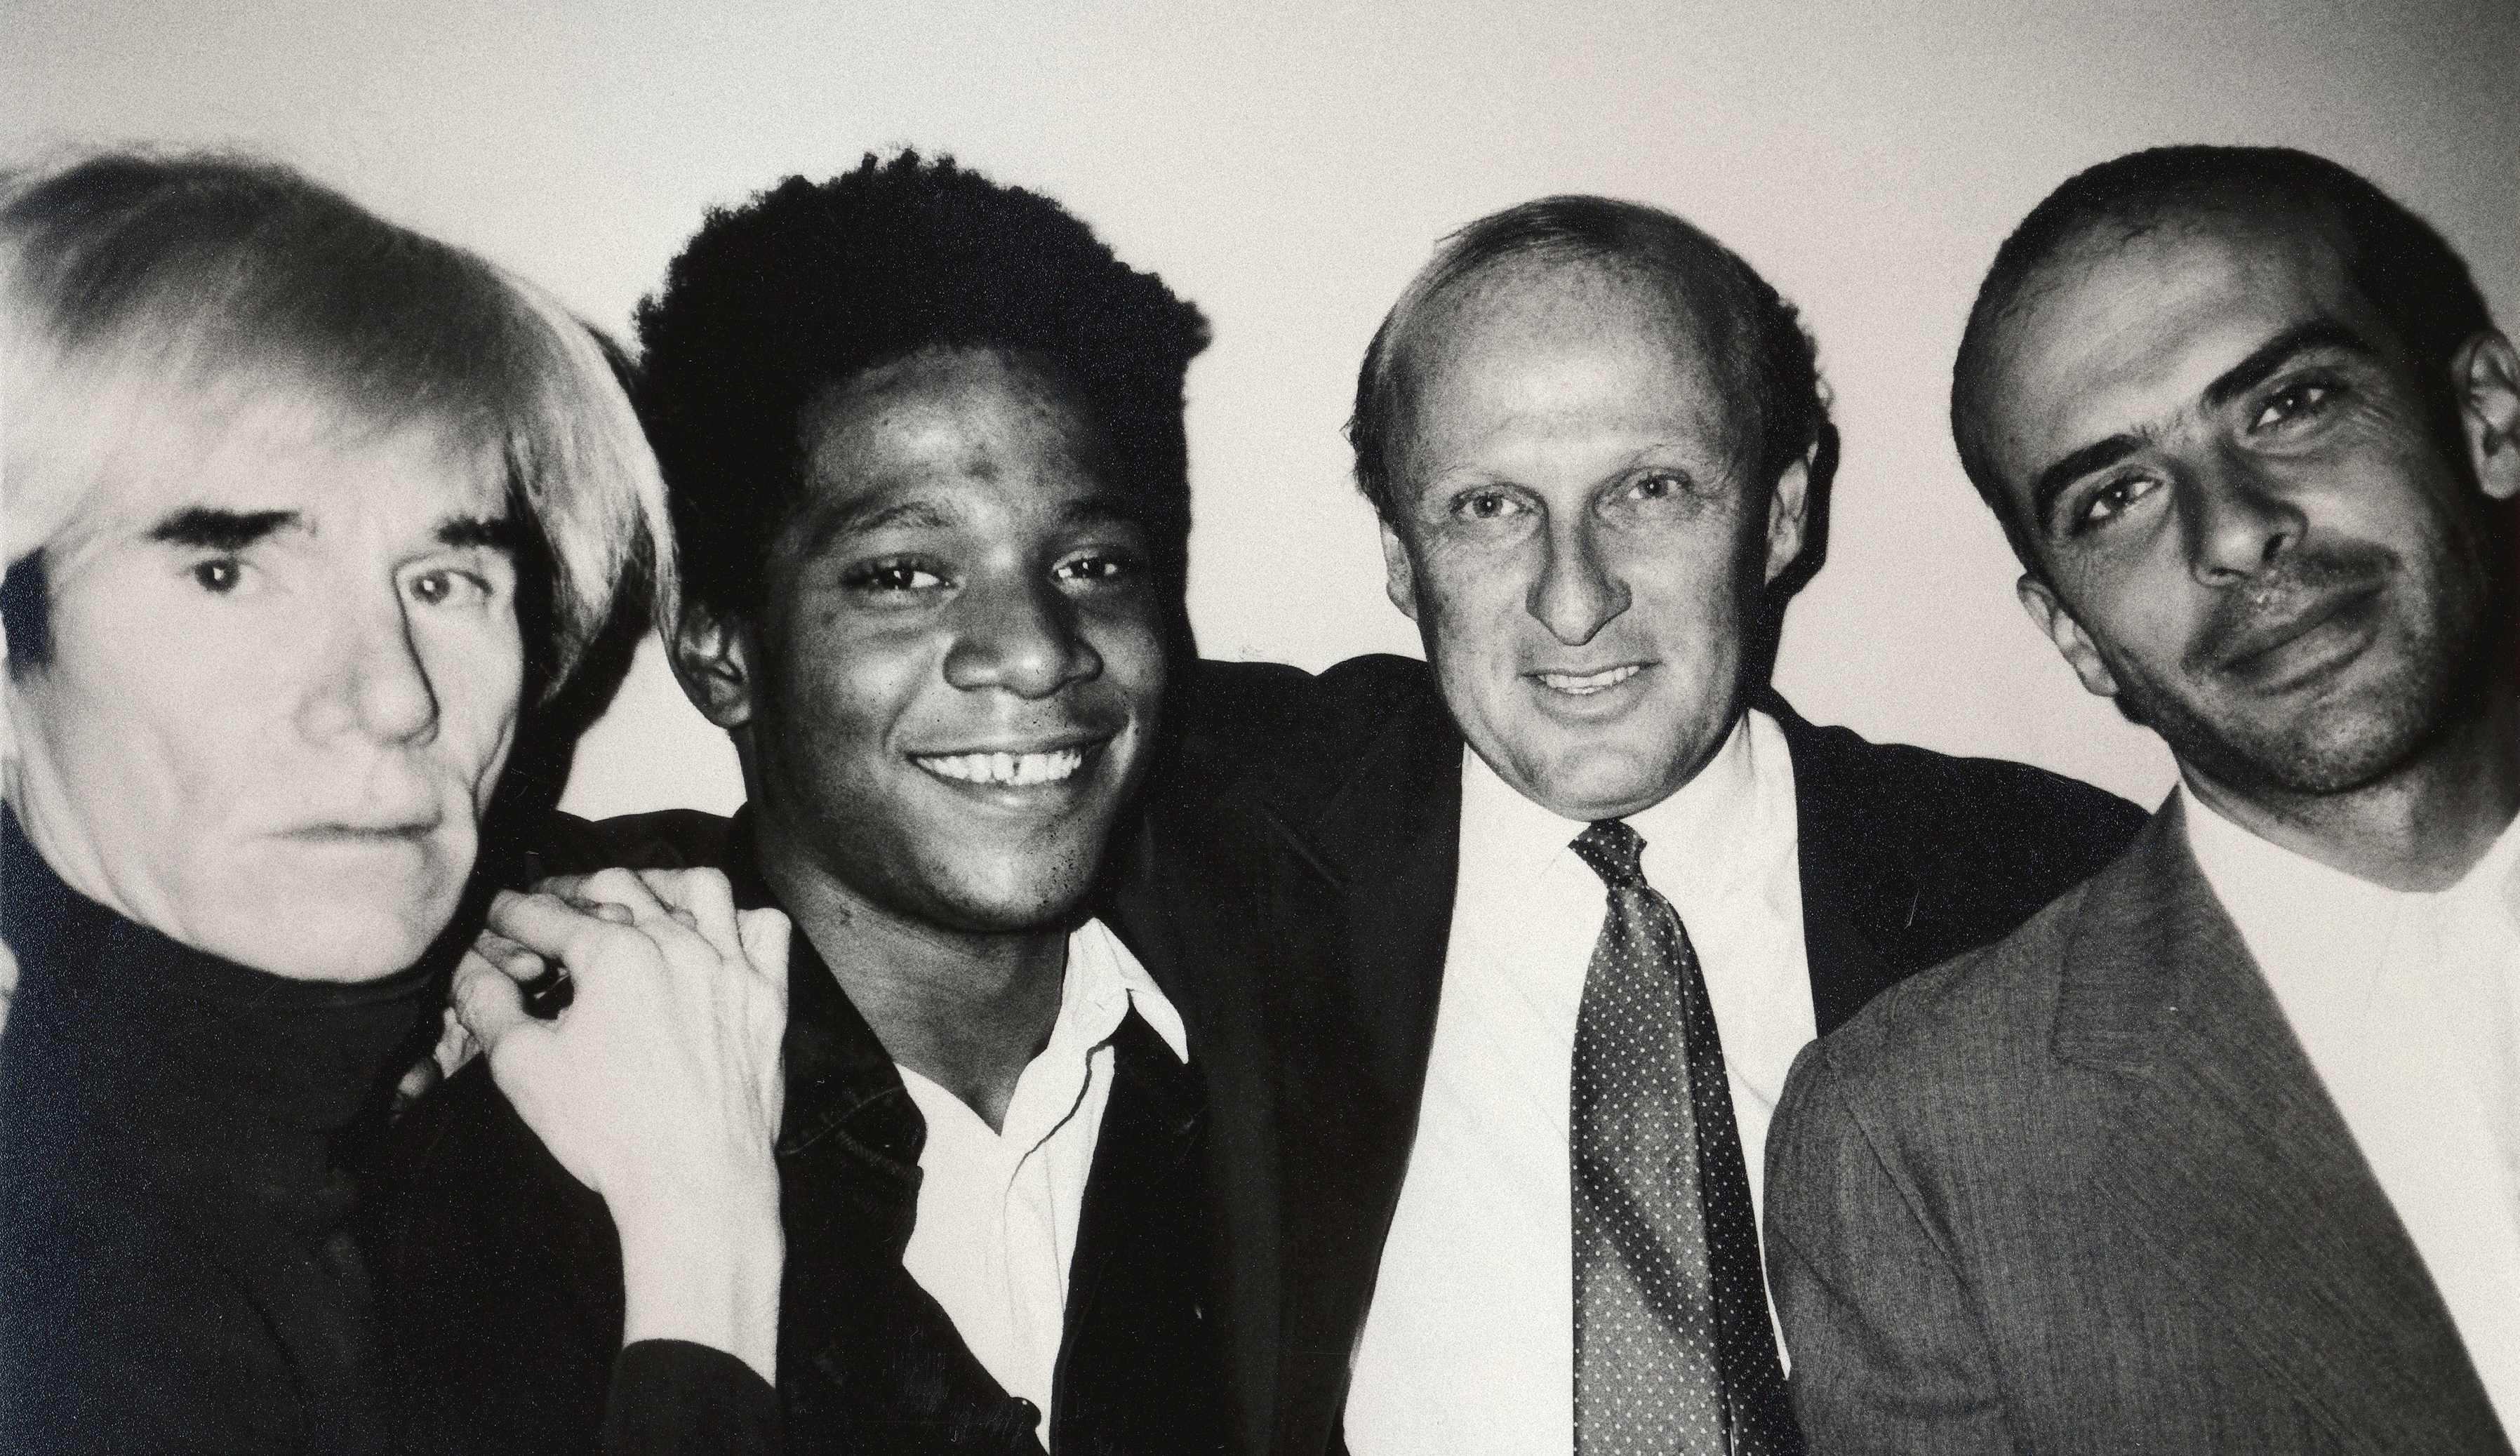 Andy_Warhol,_Jean-Michel_Basquiat,_Bruno_Bischofberger_and_Fransesco_Clemente,_New_York,_1984